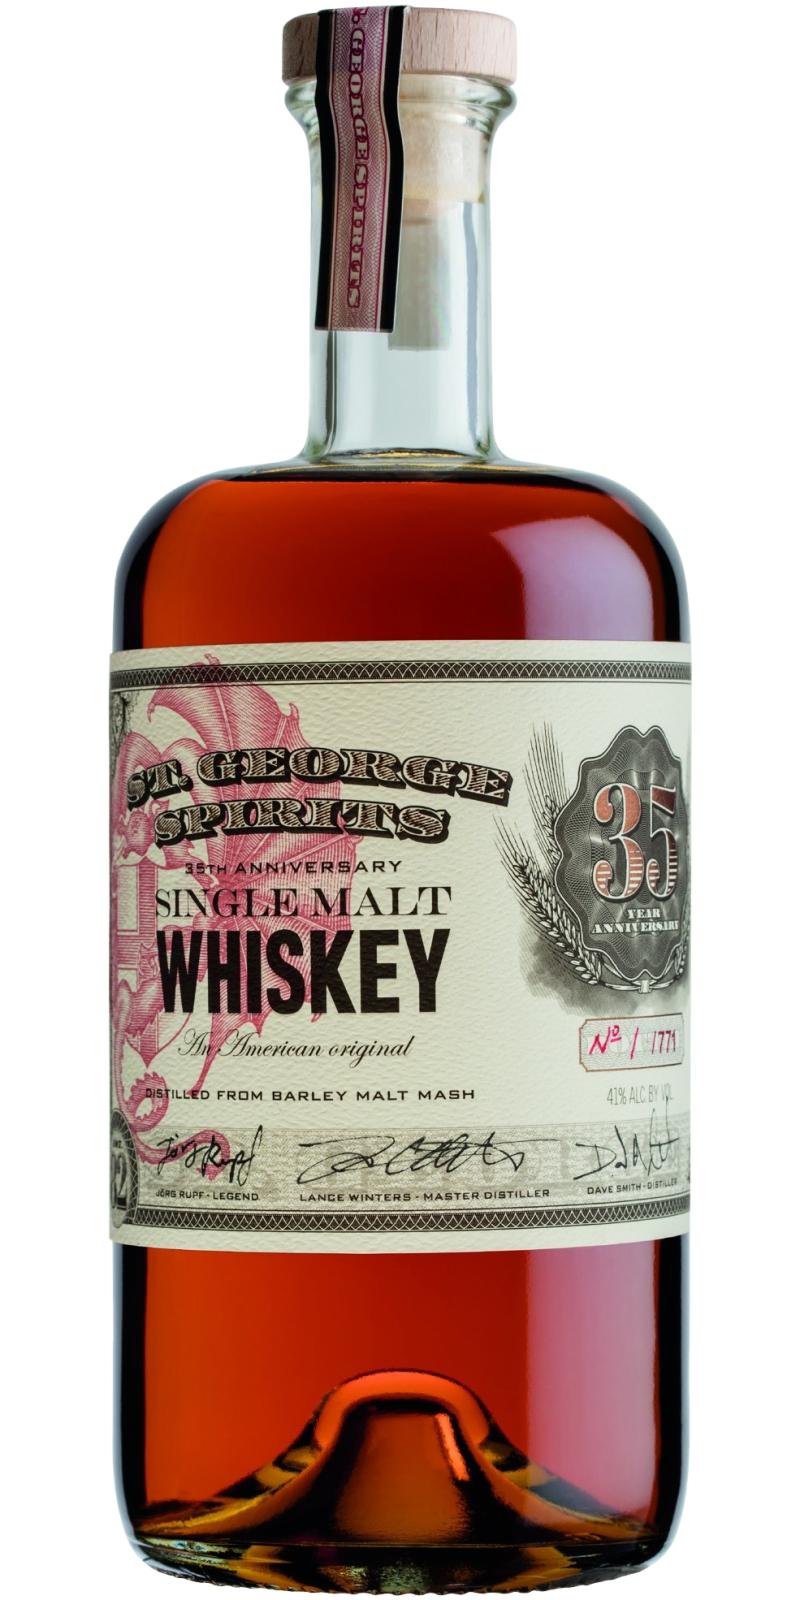 St. George Spirits Single Malt Whisky 35th Anniversary 41% 700ml